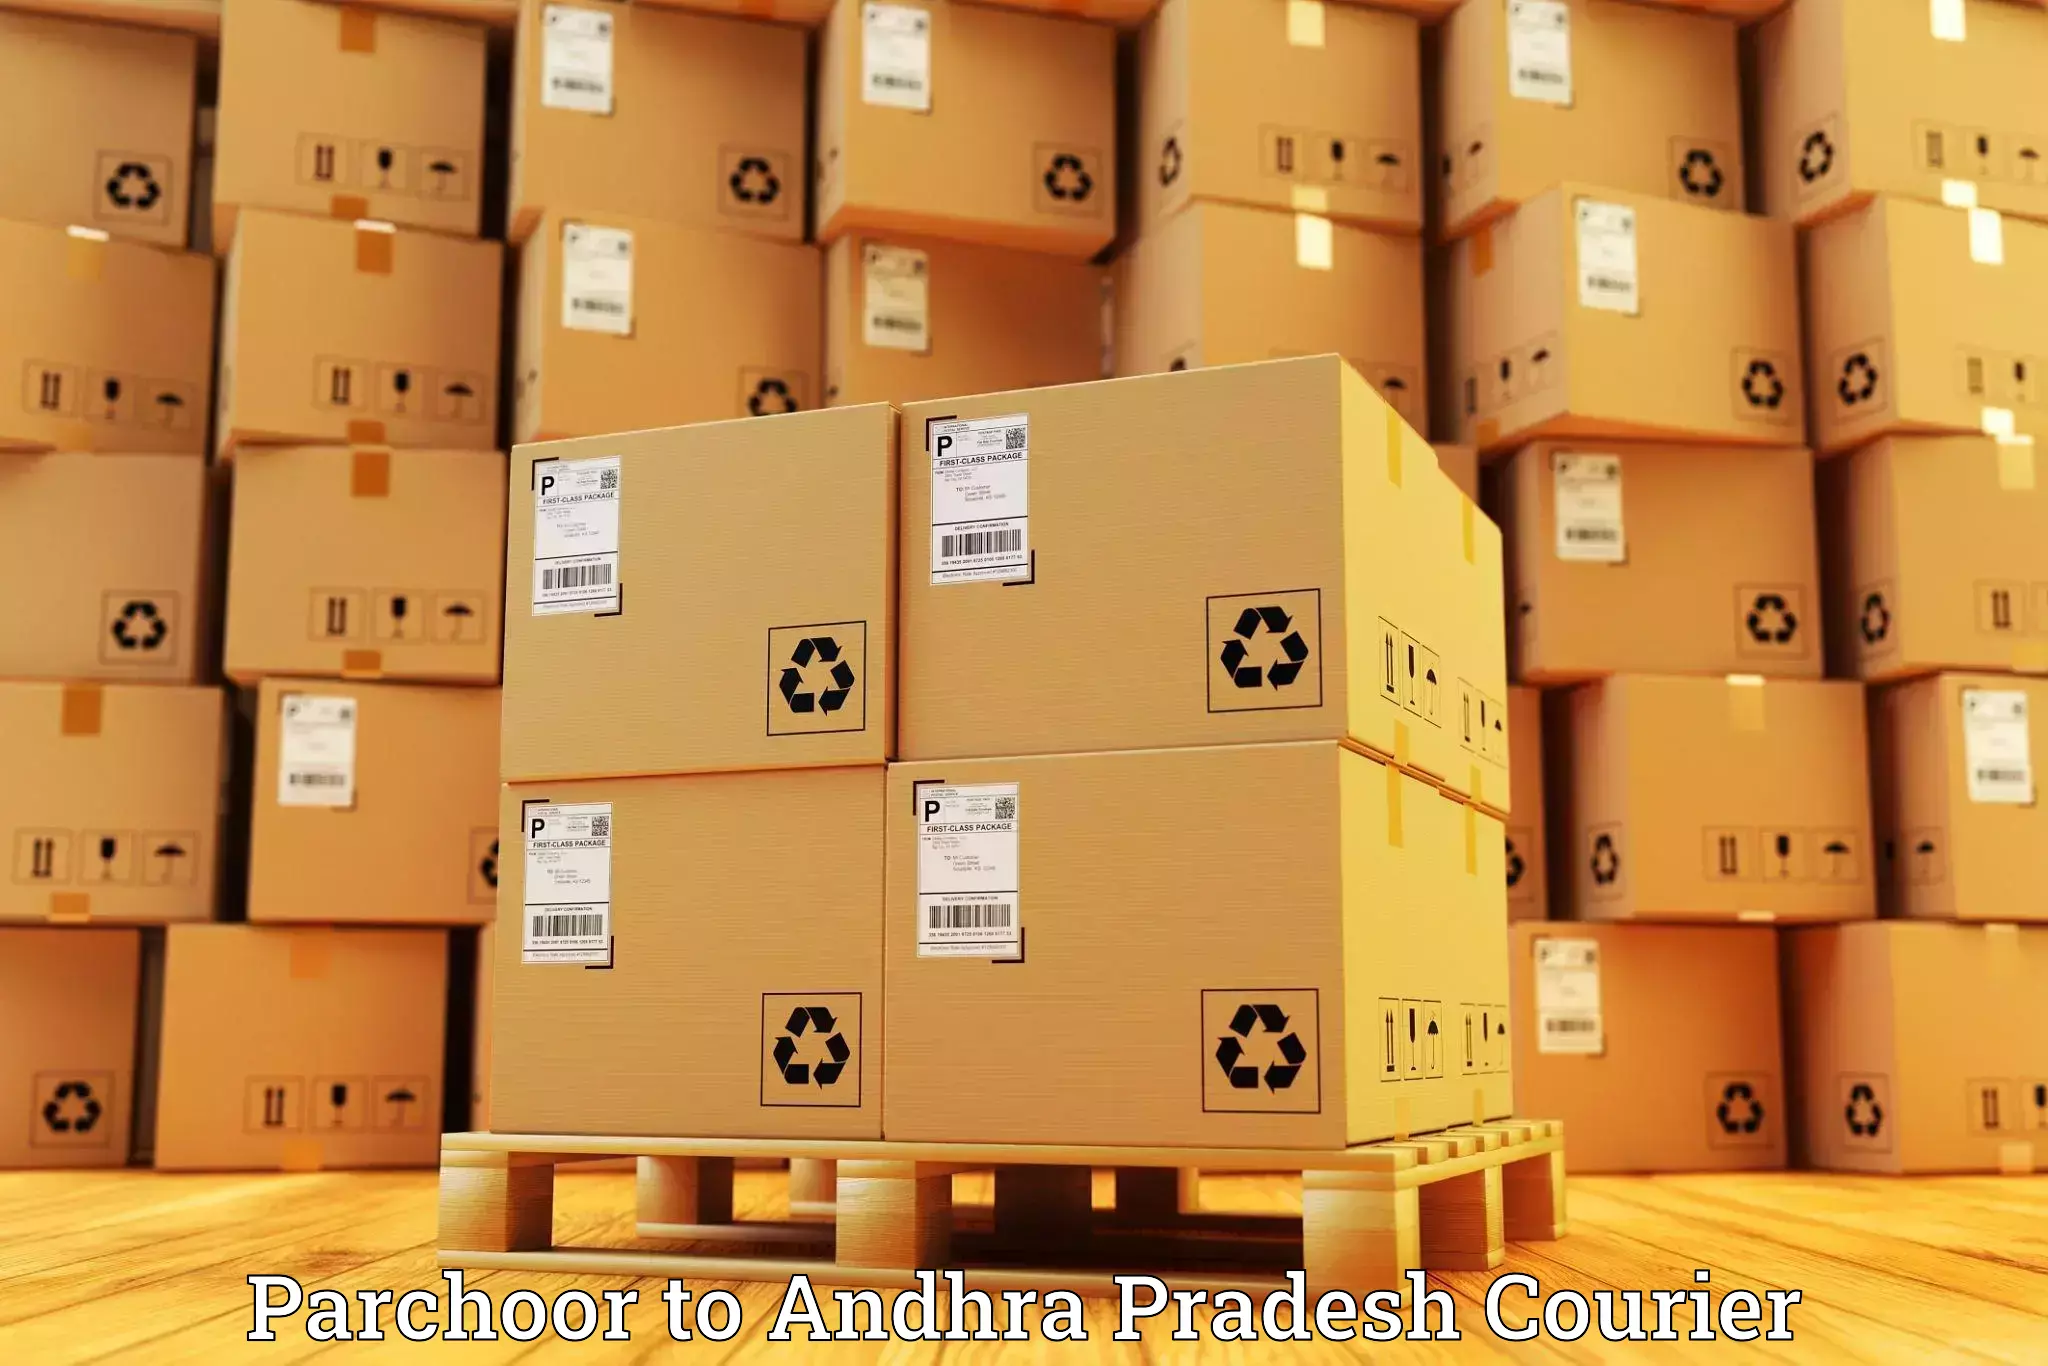 Efficient shipping operations Parchoor to Koneru Lakshmaiah Education Foundation University Vaddeswaram